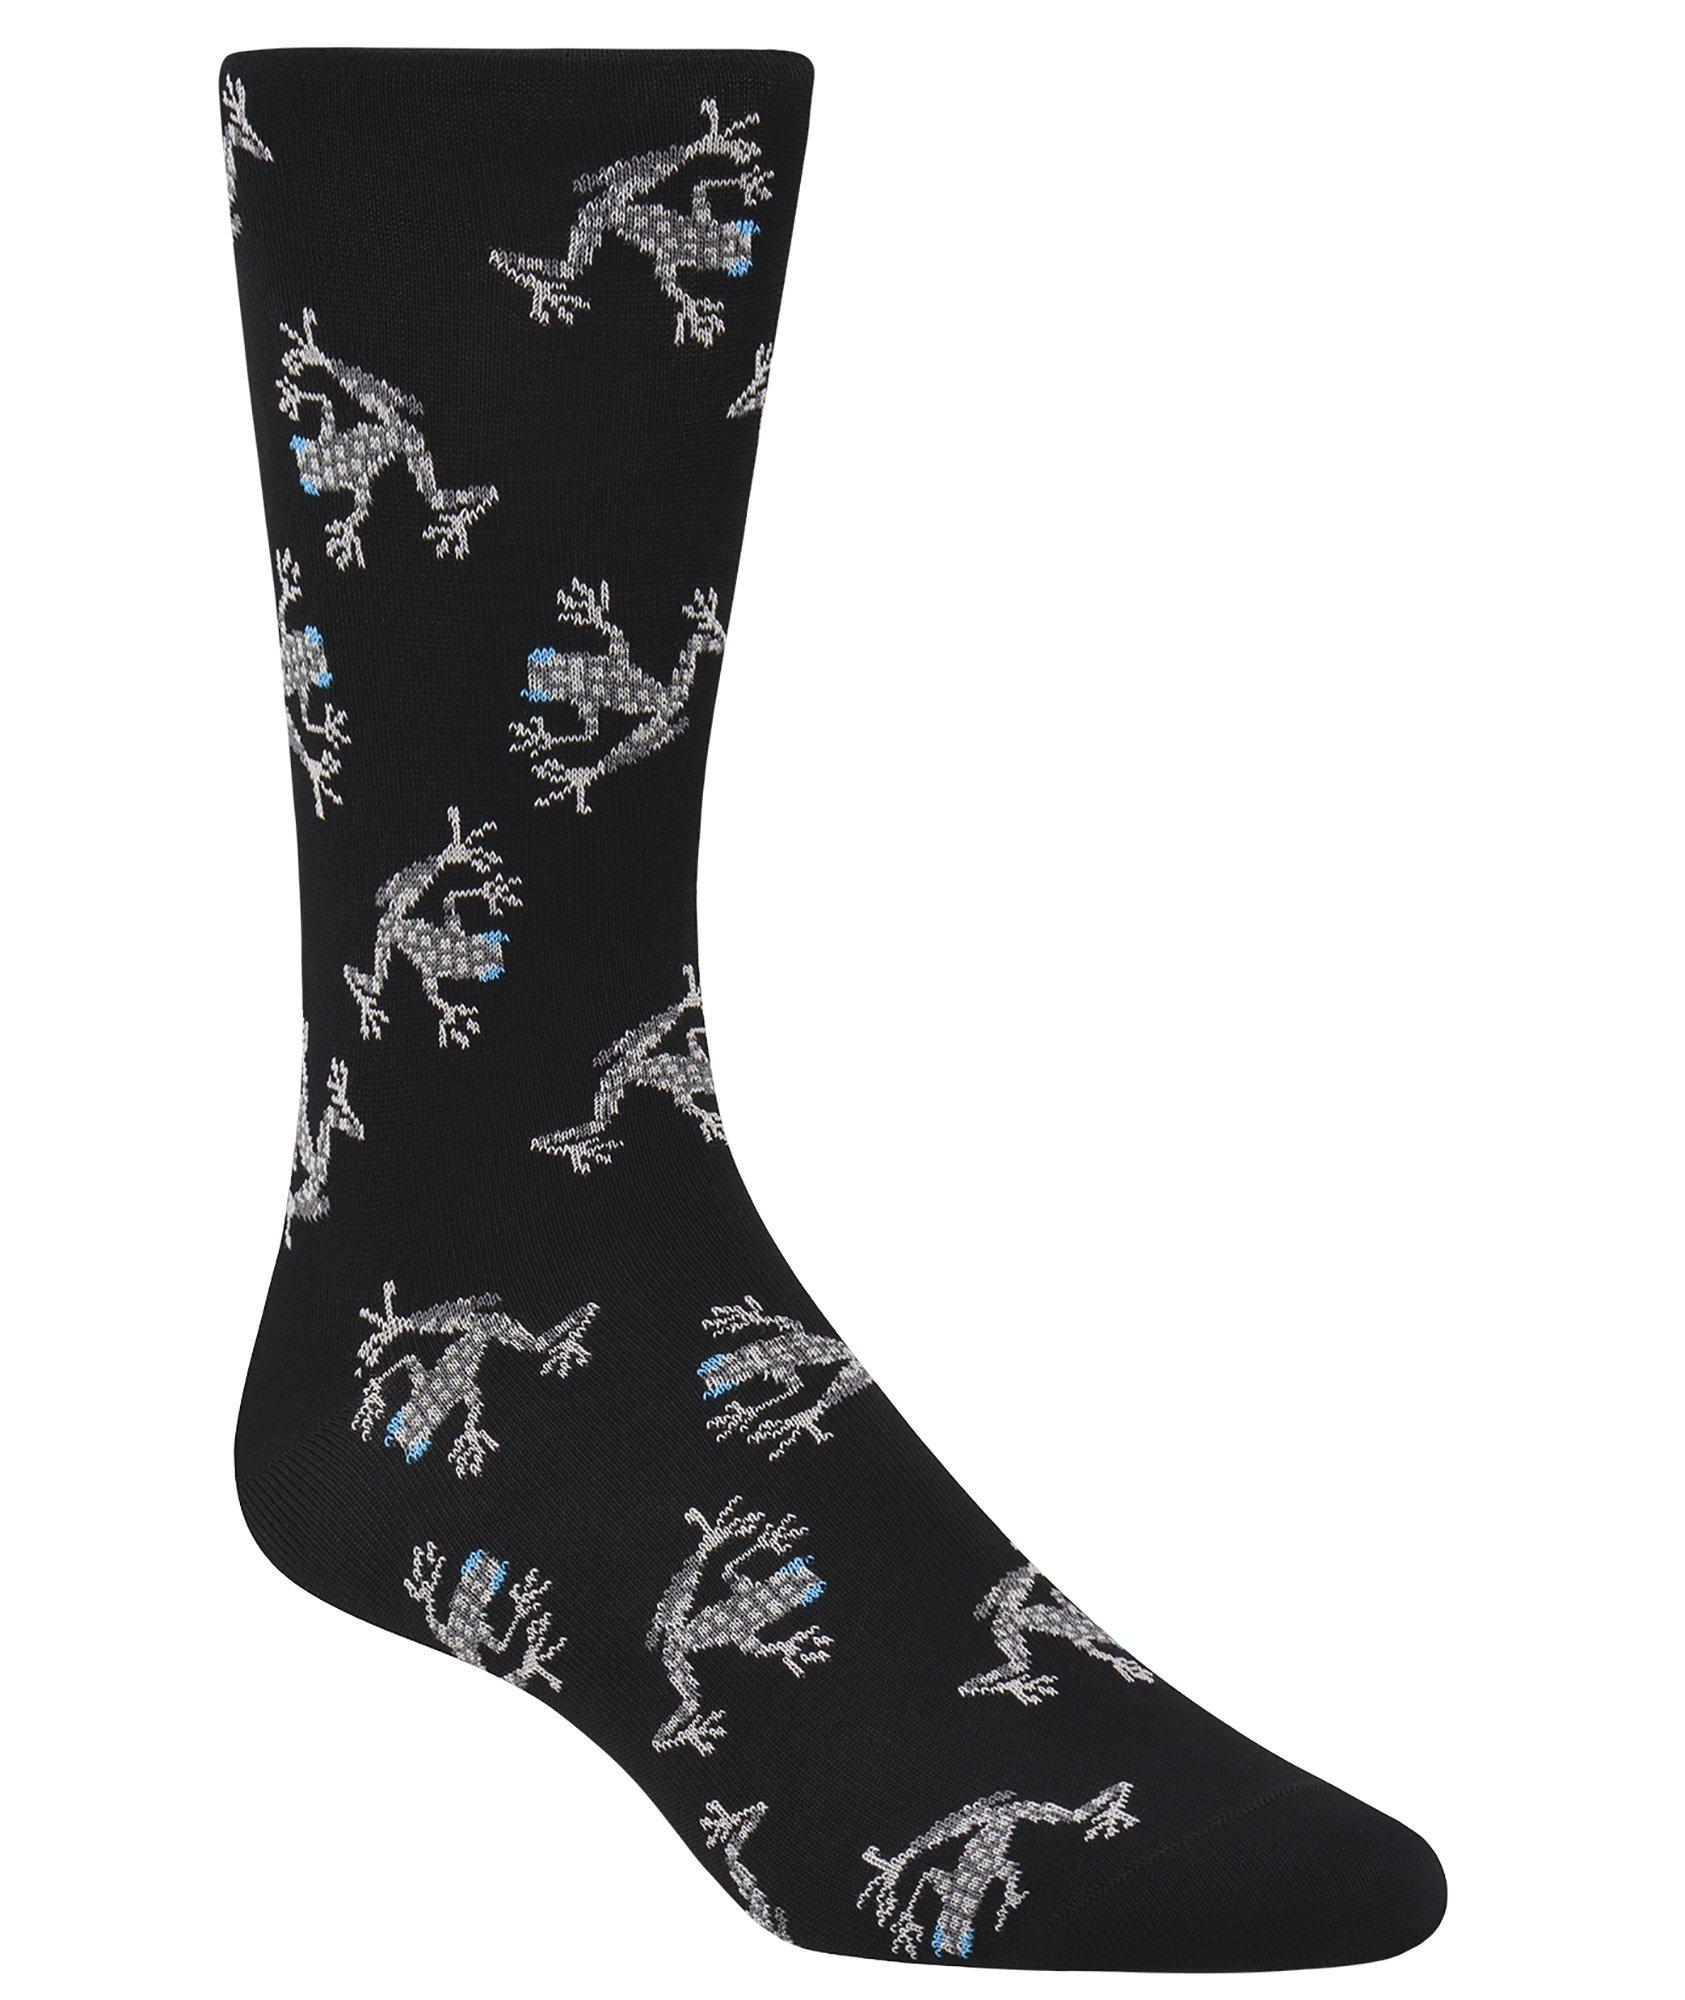 Printed Mercerized Cotton Socks image 0